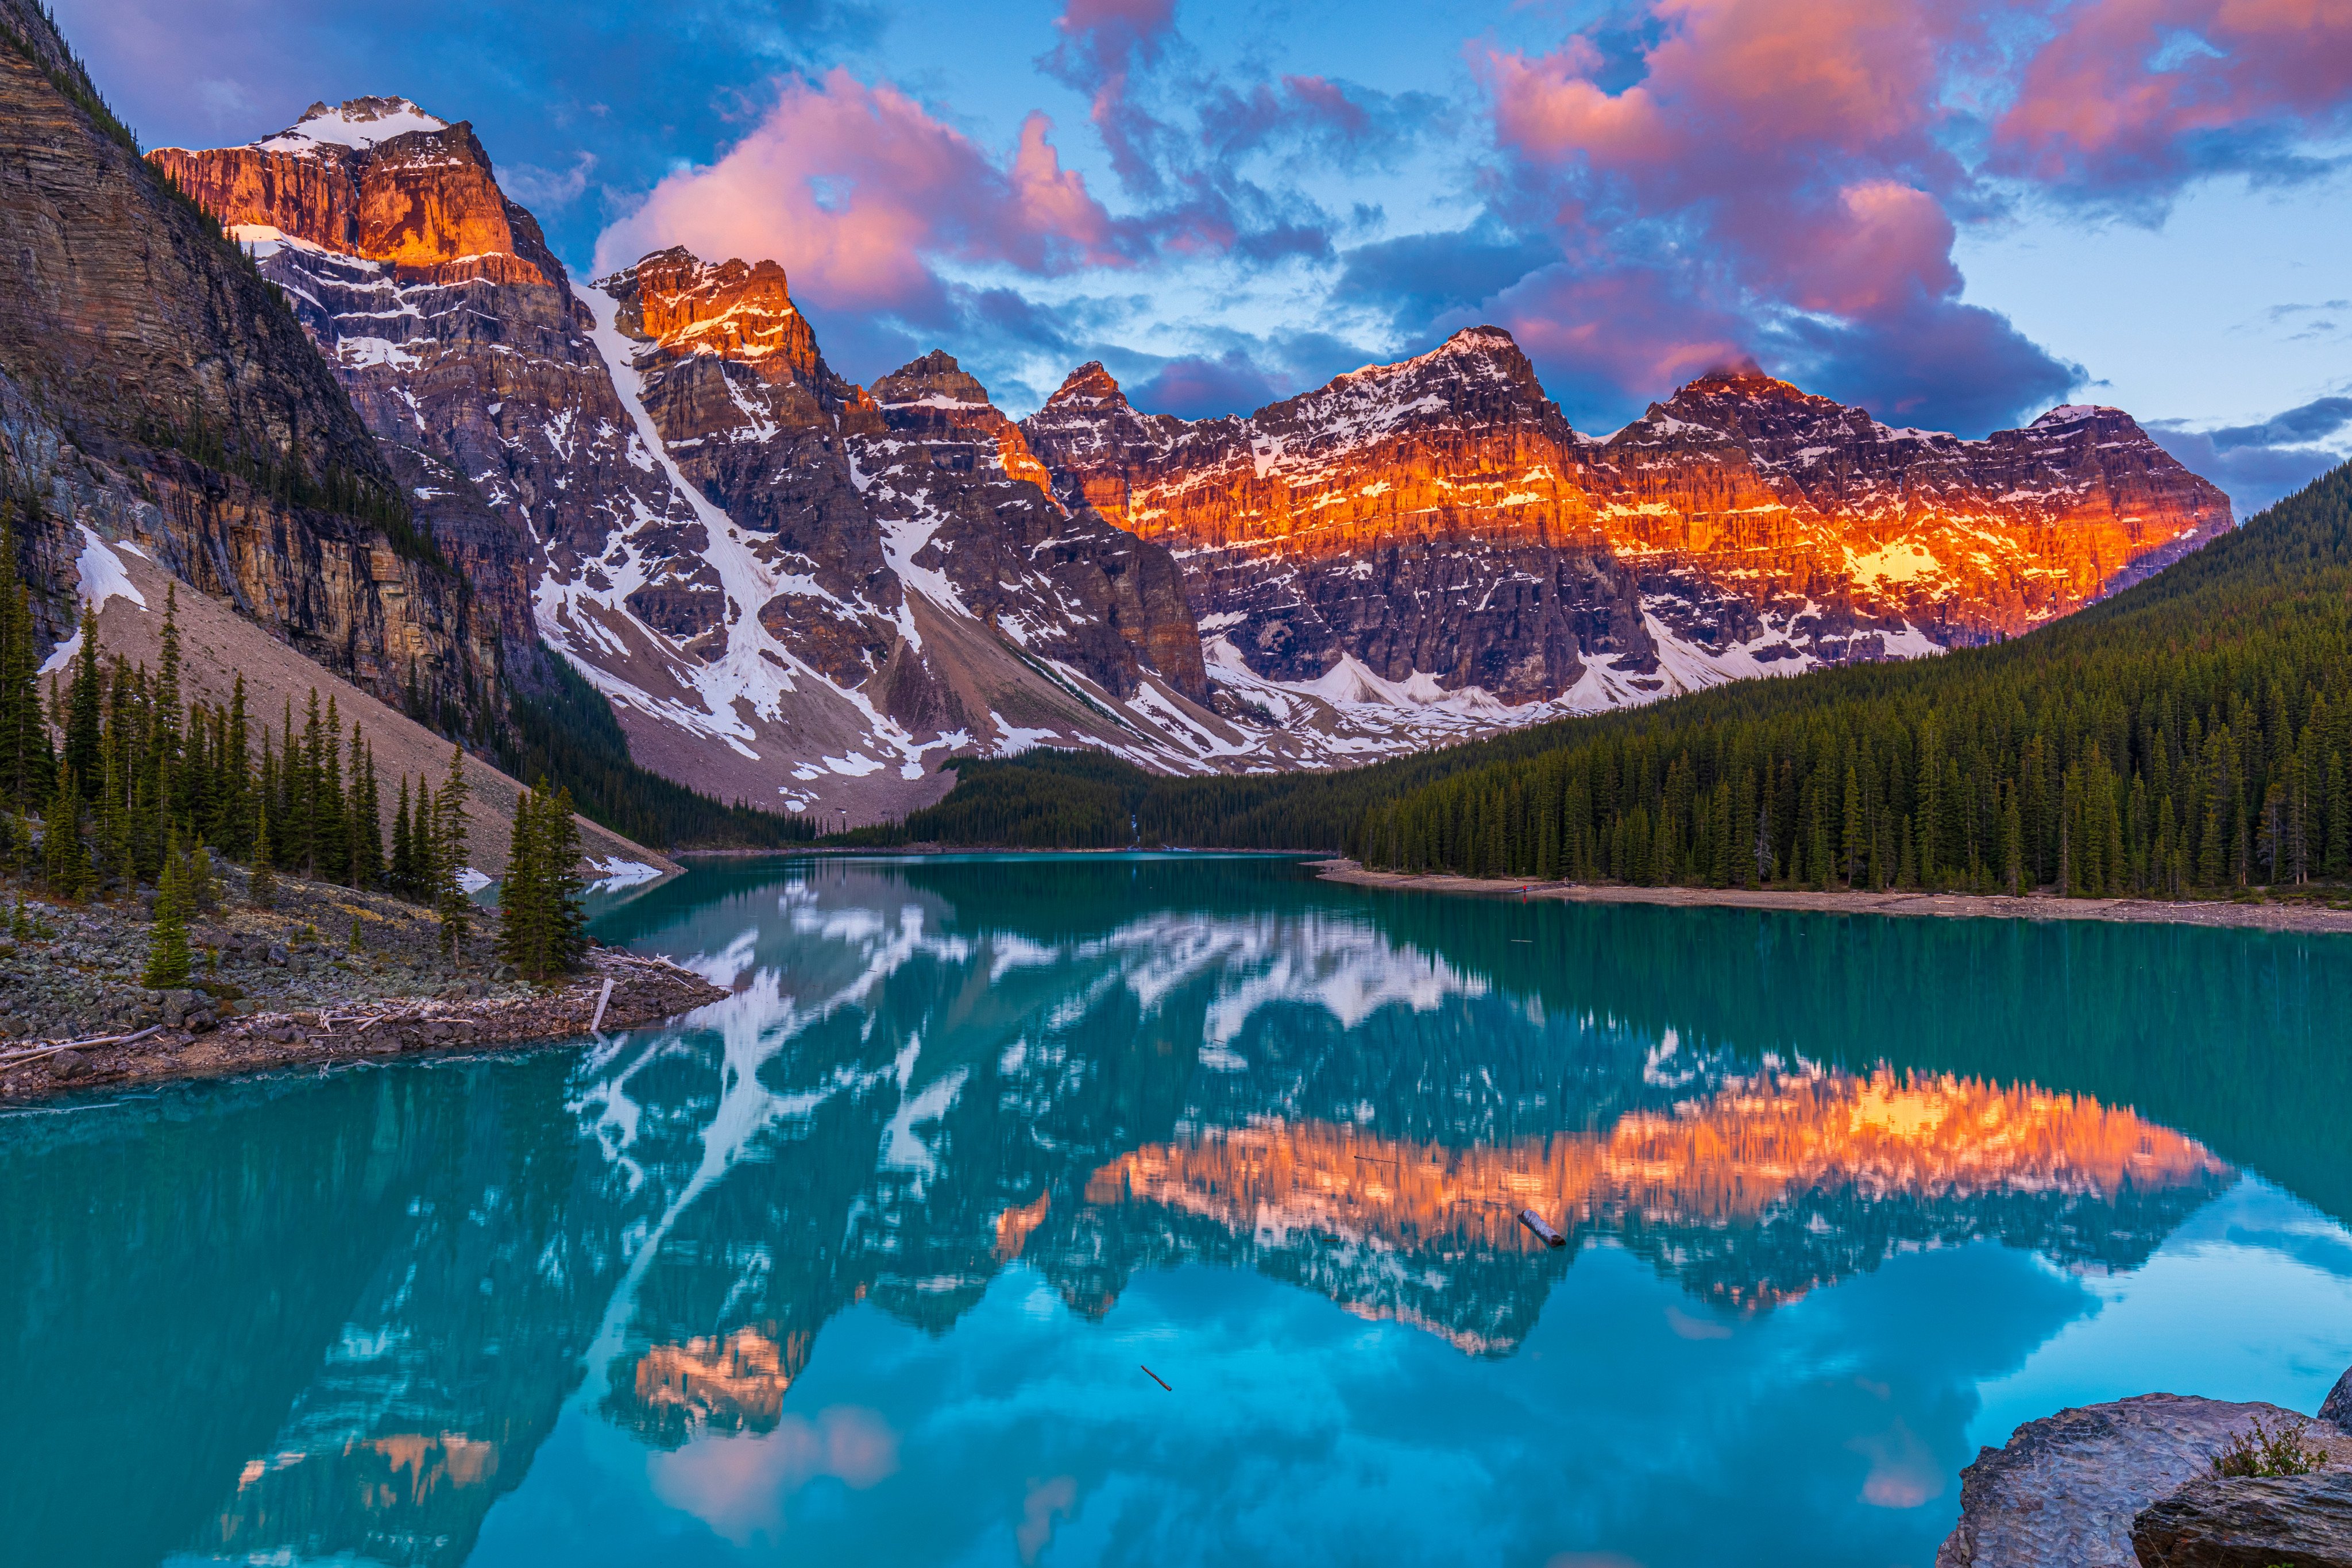 Moraine Lake in Banff National Park, Canada. Photo: Shutterstock